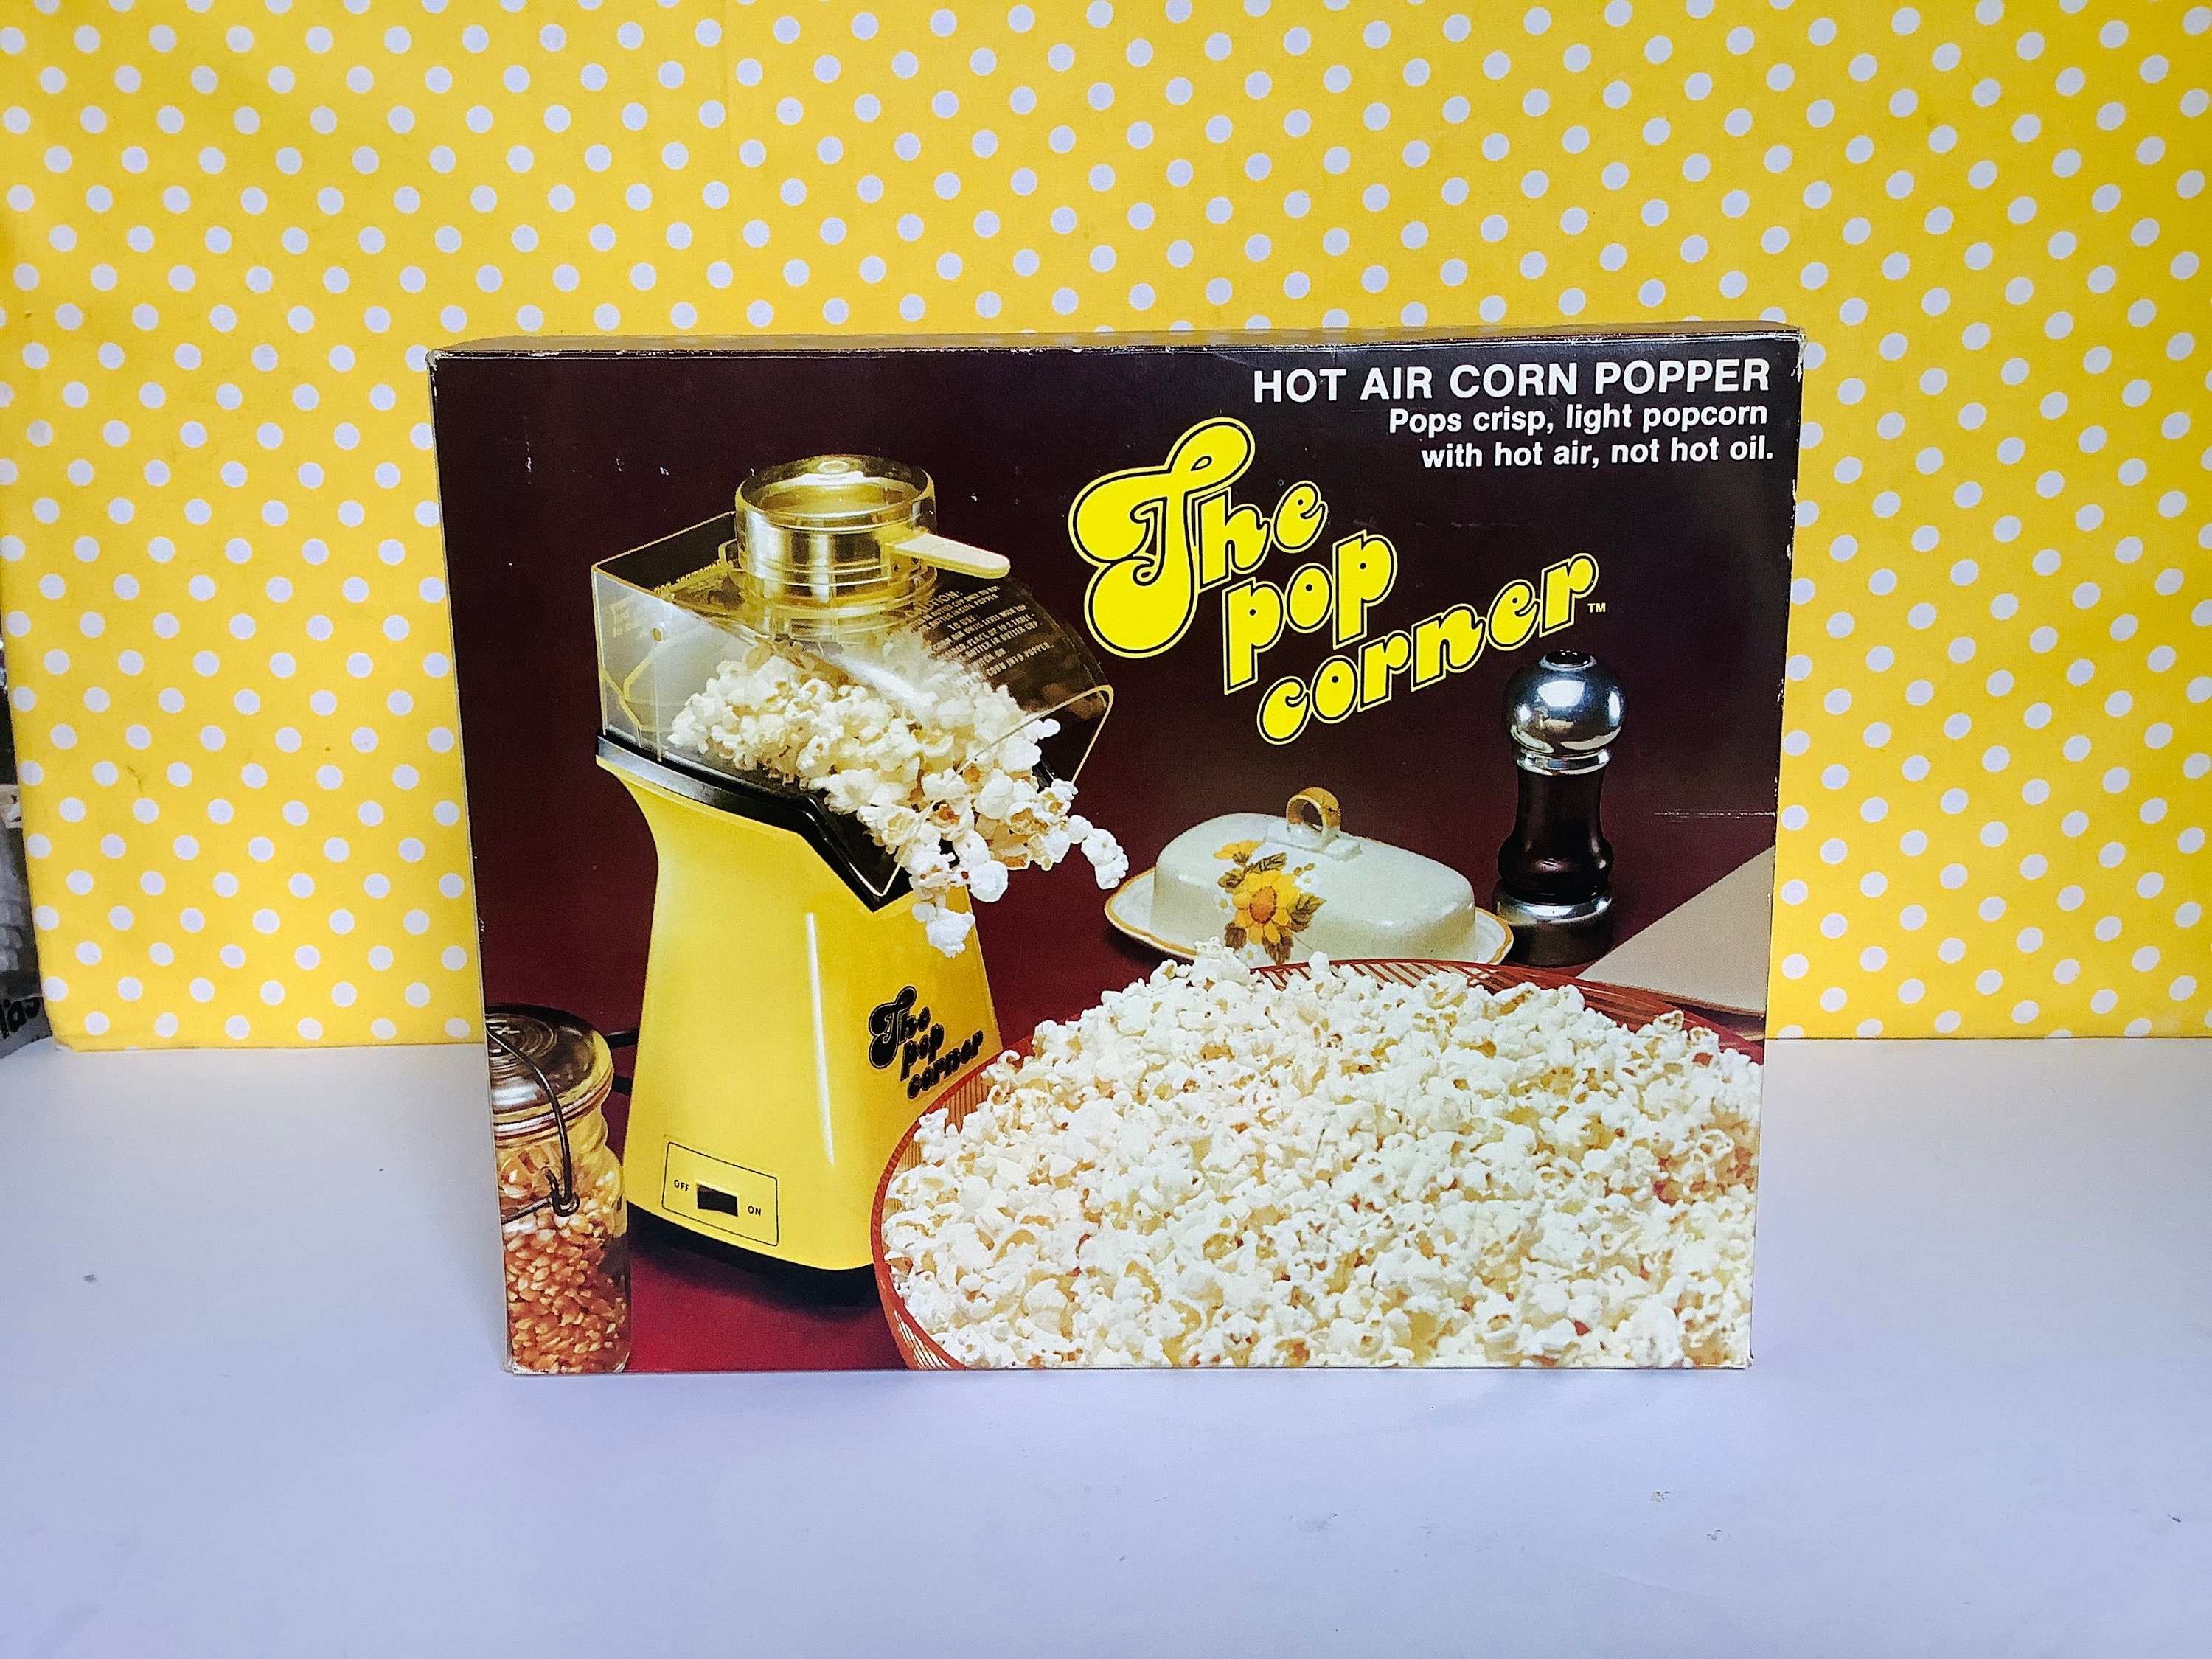 NEW Vitnage Popcorn Popper, Small Popcorn Popper, Hot Air Corn Popper, the  Pop Corner, New Old Stock, NOS, Popcorn Now 